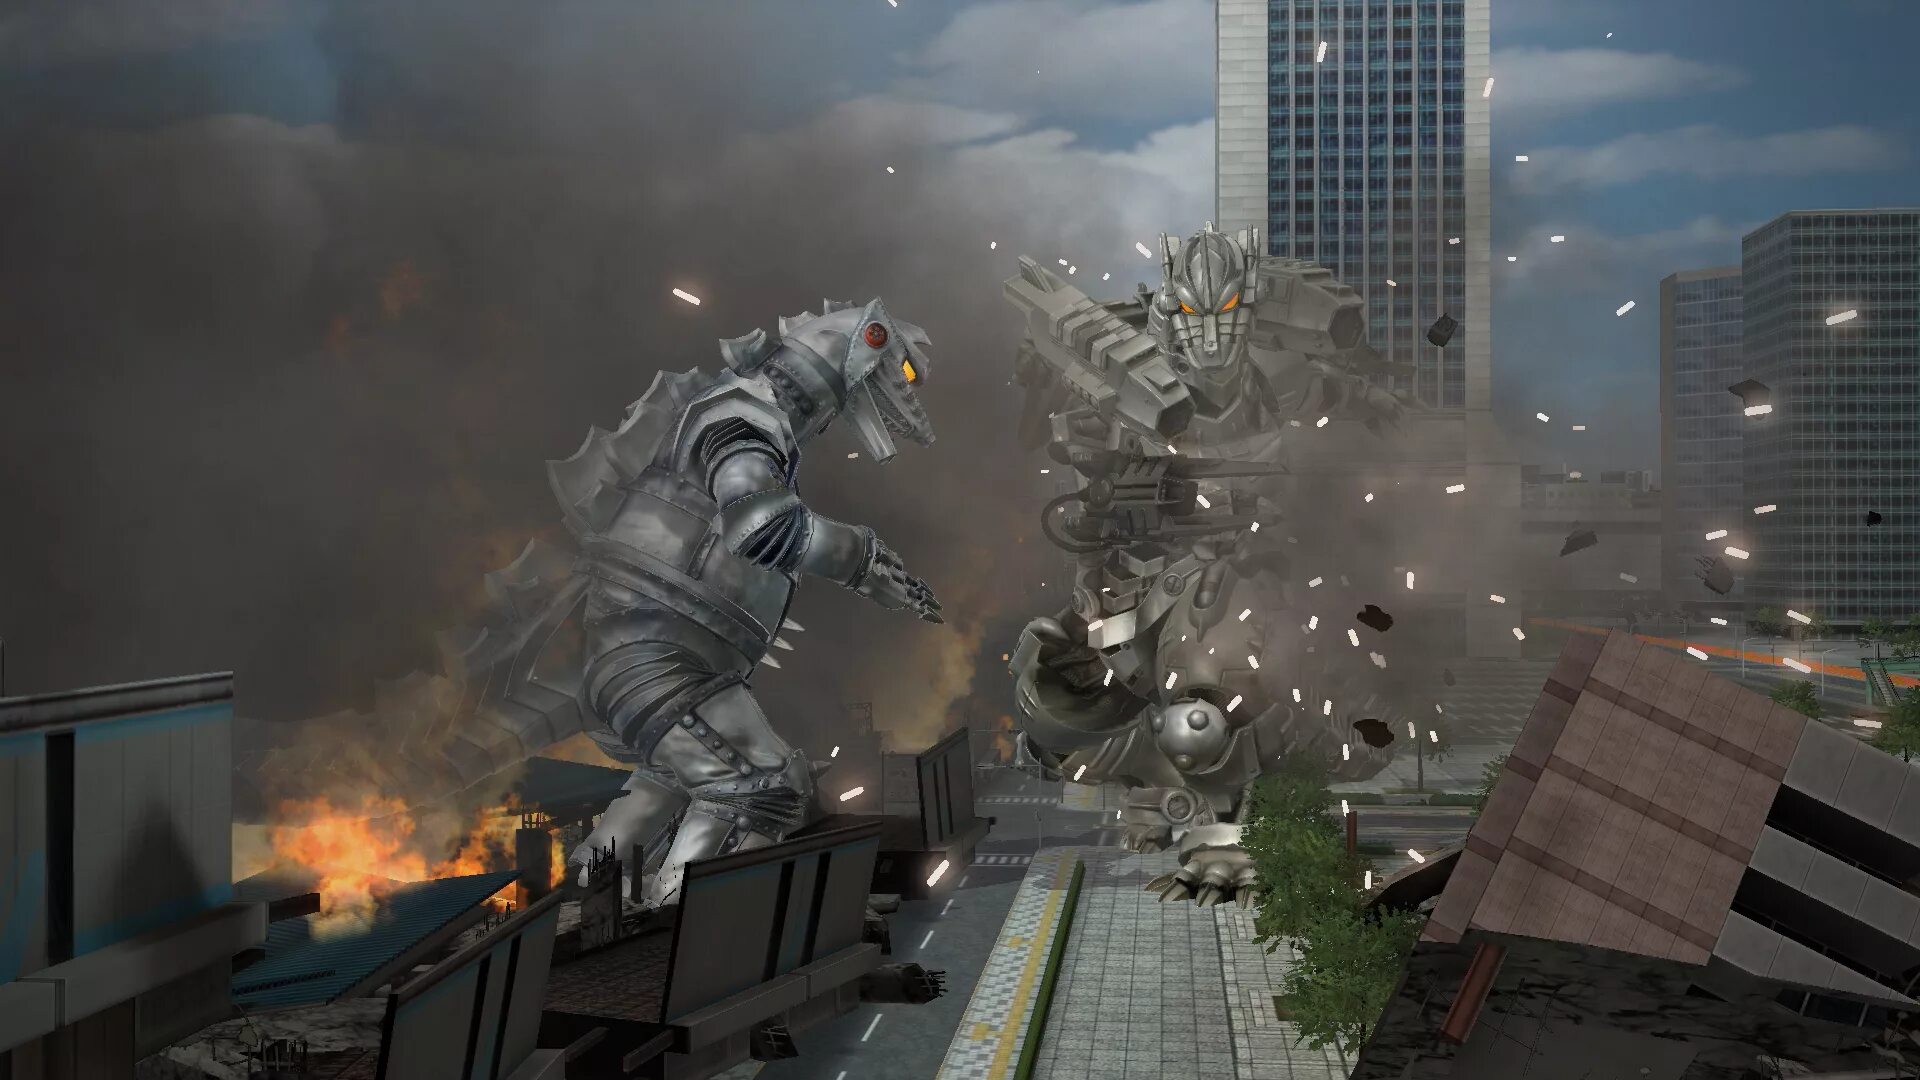 Годзилла игра на ps4. Godzilla игра 2014. Godzilla игра 2015. Игра Годзилла Годзилла 2014.